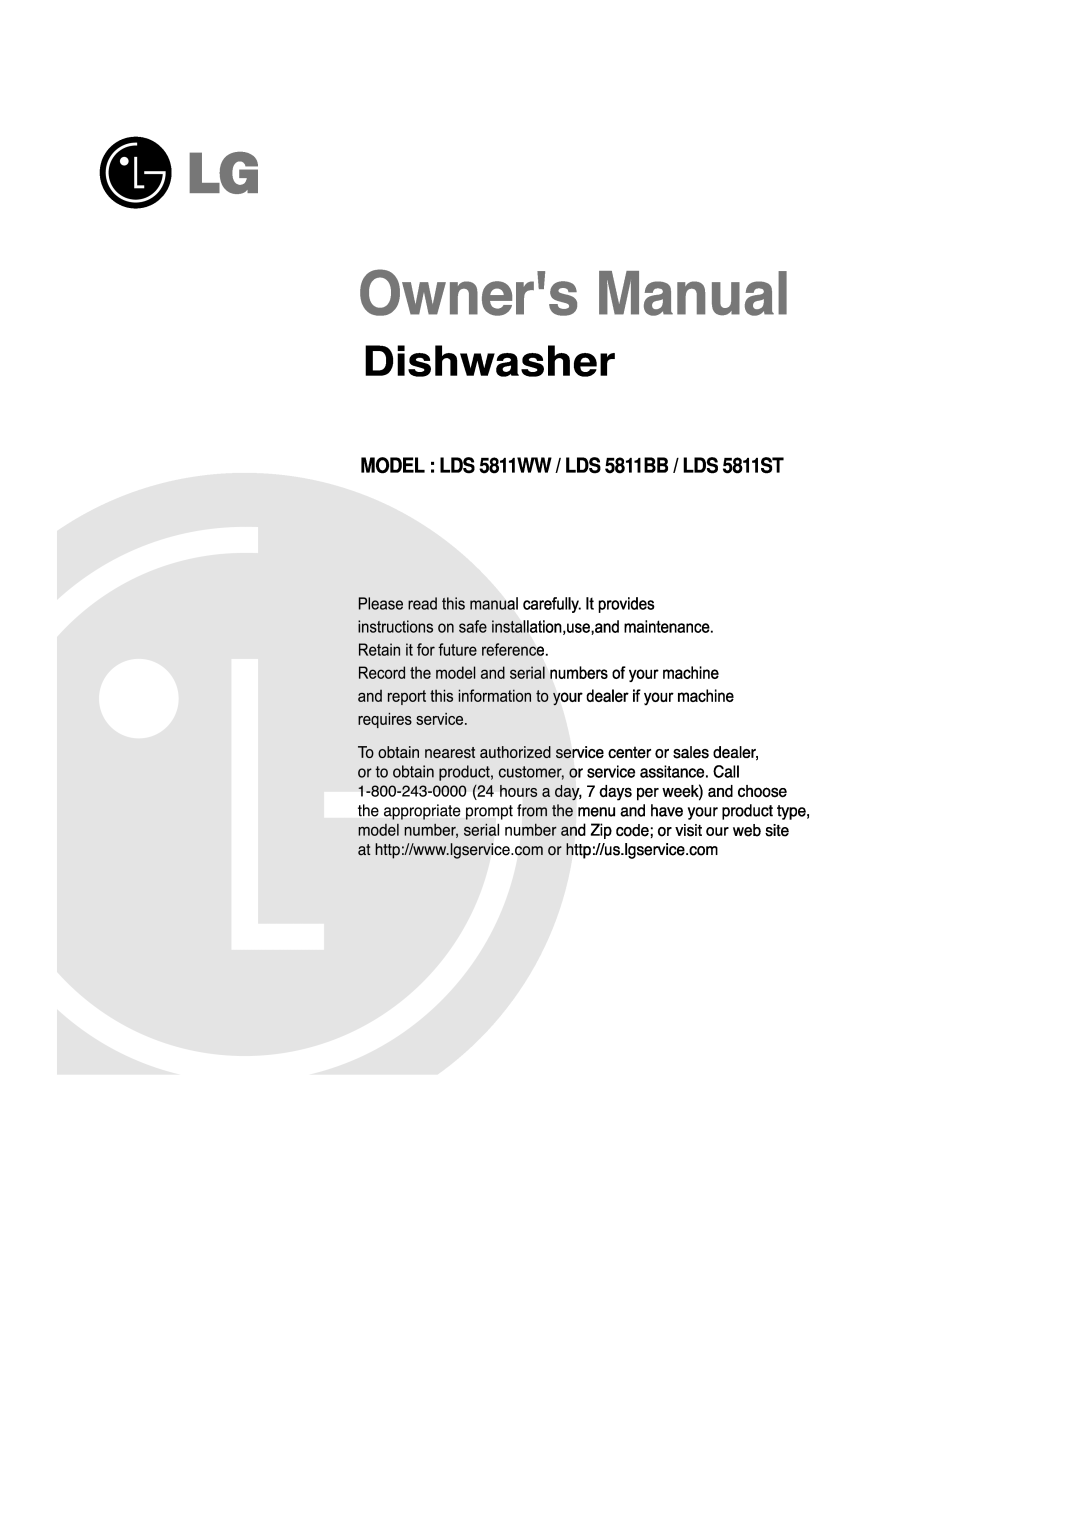 LG Electronics manual MODEL LDS 5811WW / LDS 5811BB / LDS 5811ST, Dishwasher 